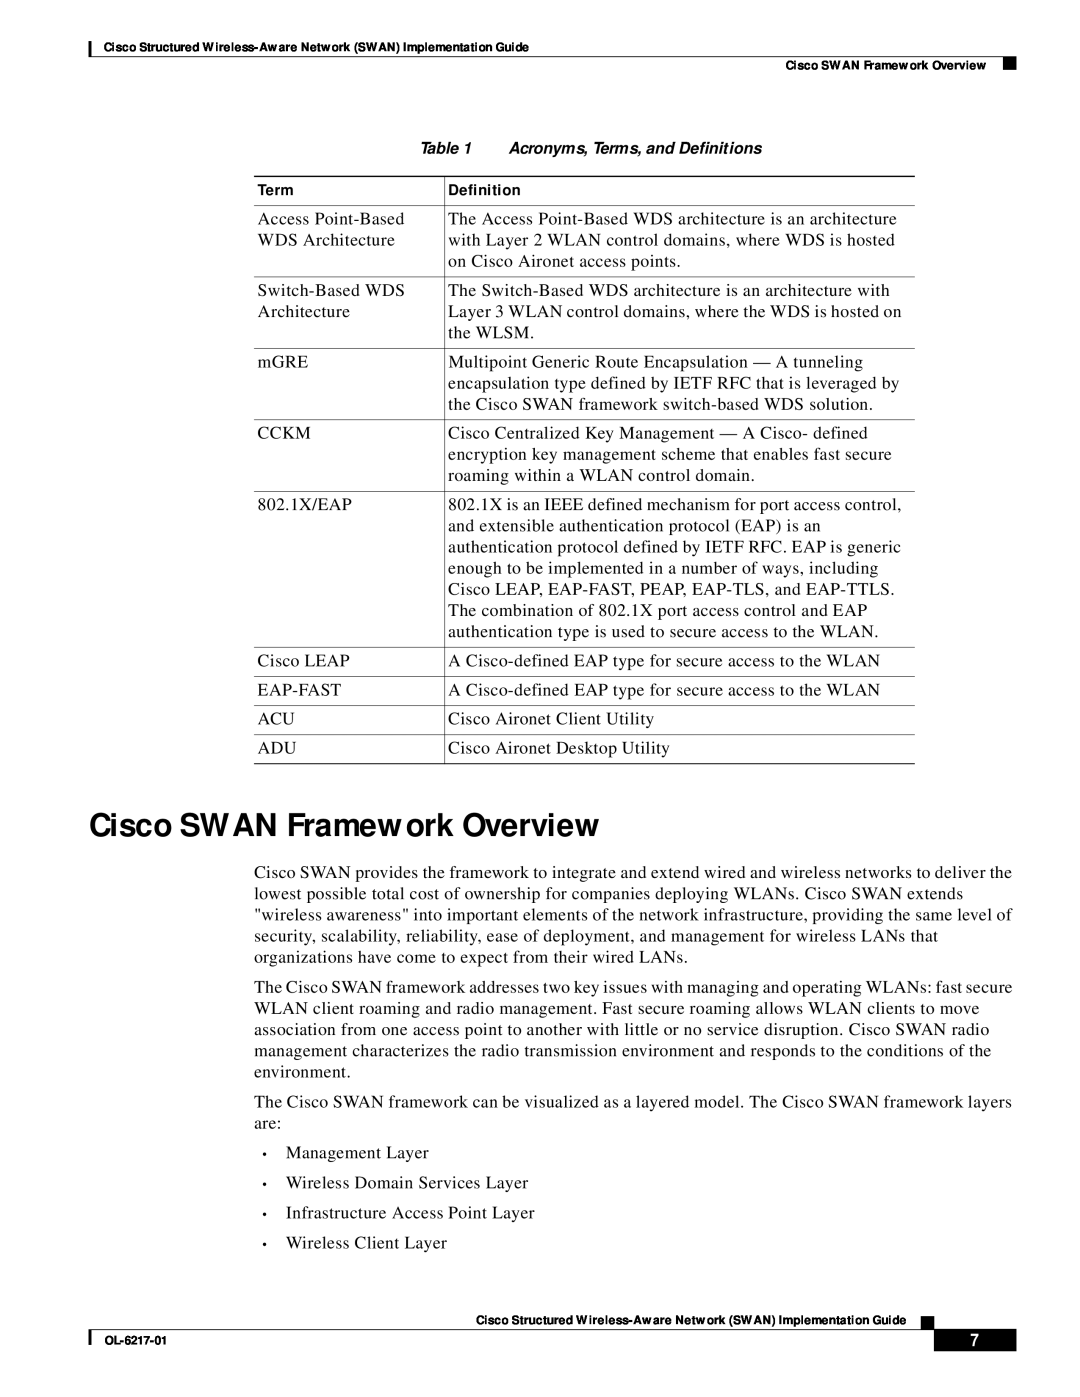 Cisco Systems OL-6217-01 manual Cisco SWAN Framework Overview, Term, Definition 